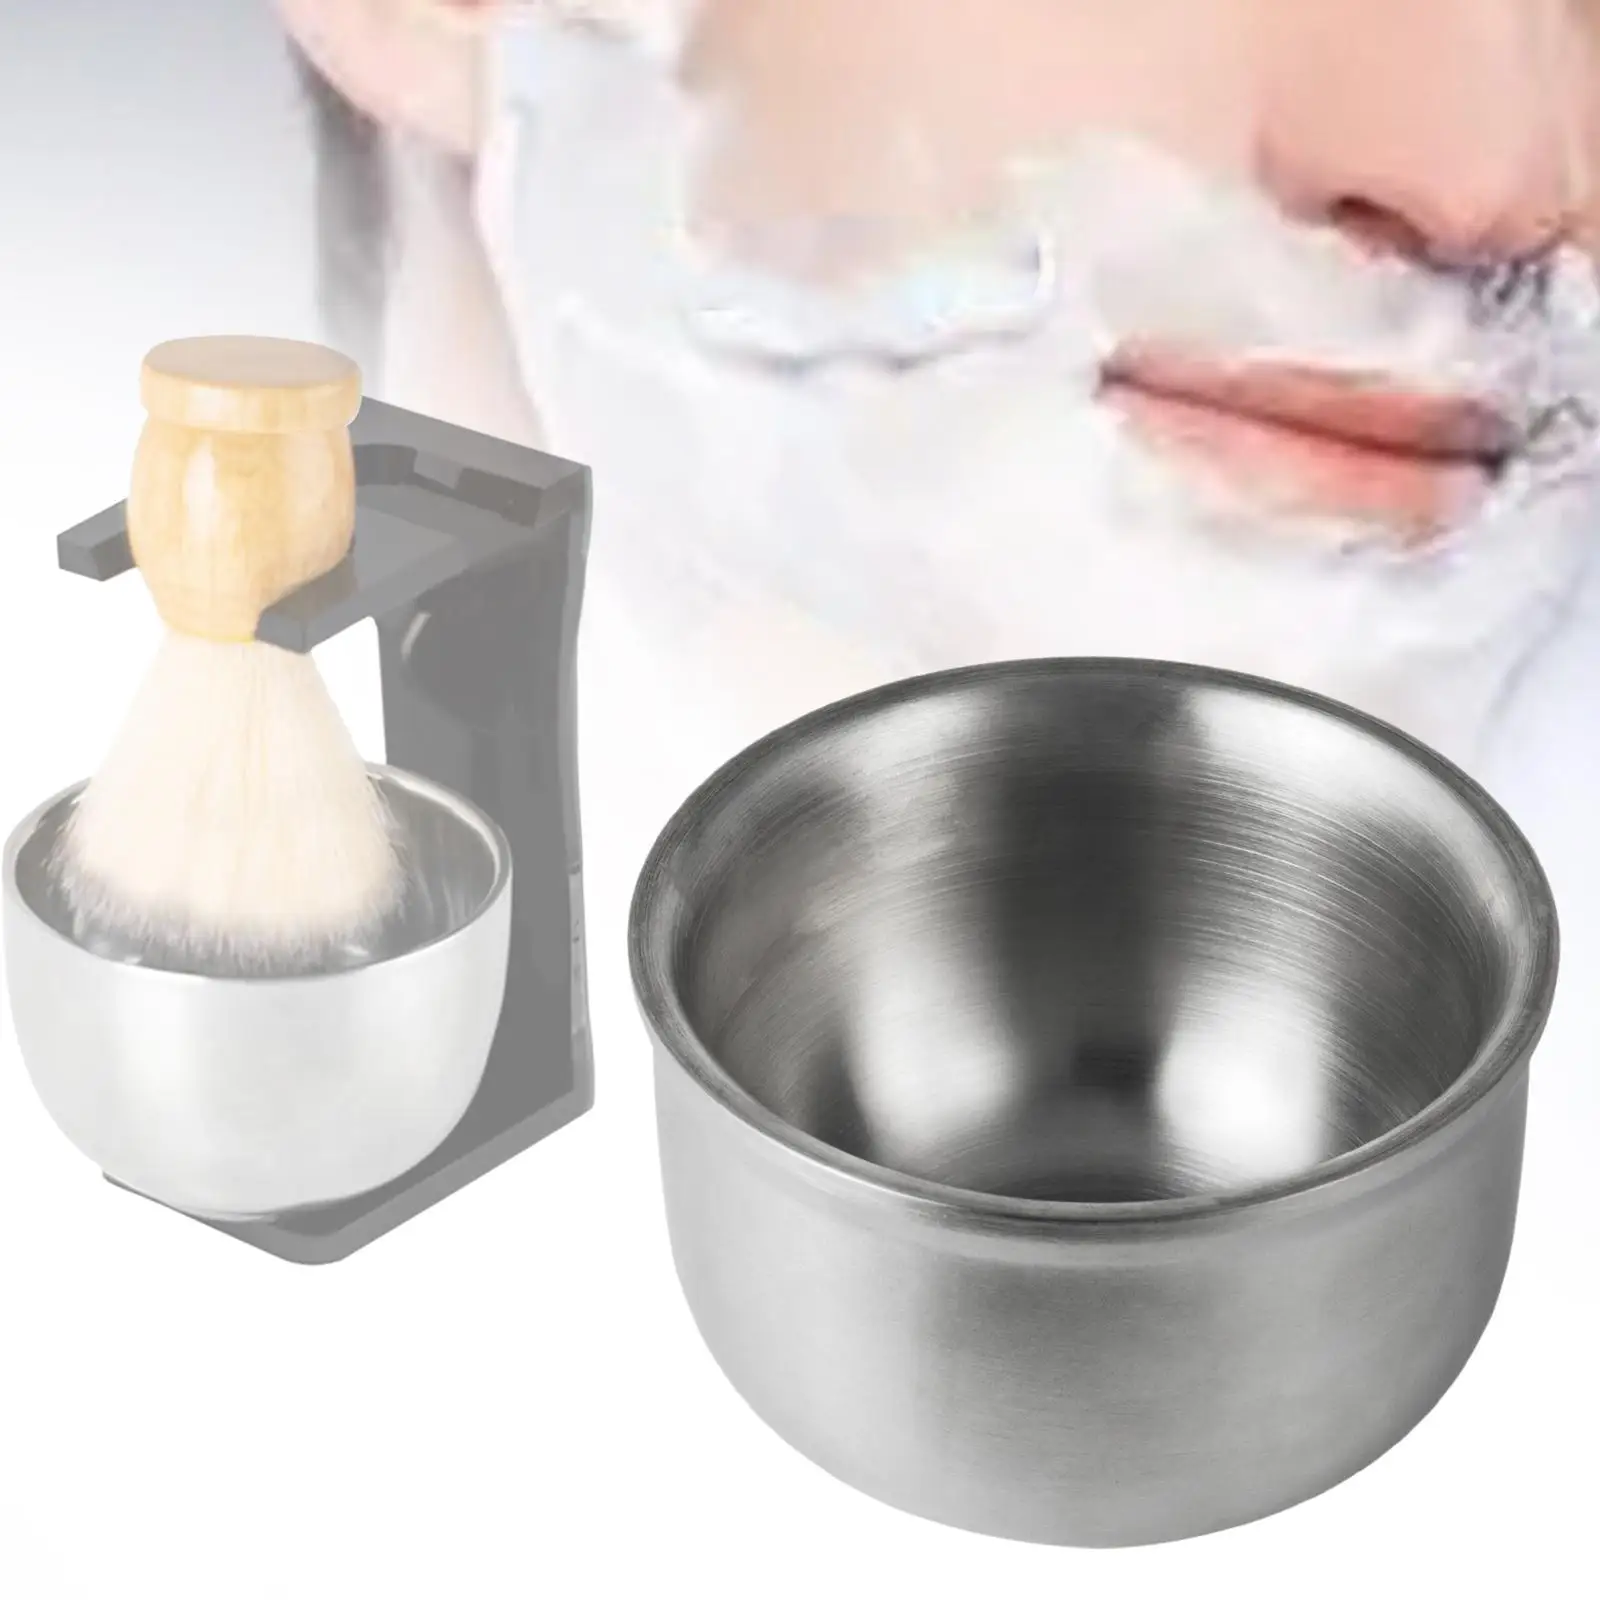 Shaving Bowl Shaving Mug Heat Insulation Shave Soap Cup Shaving Cup for Men Gift